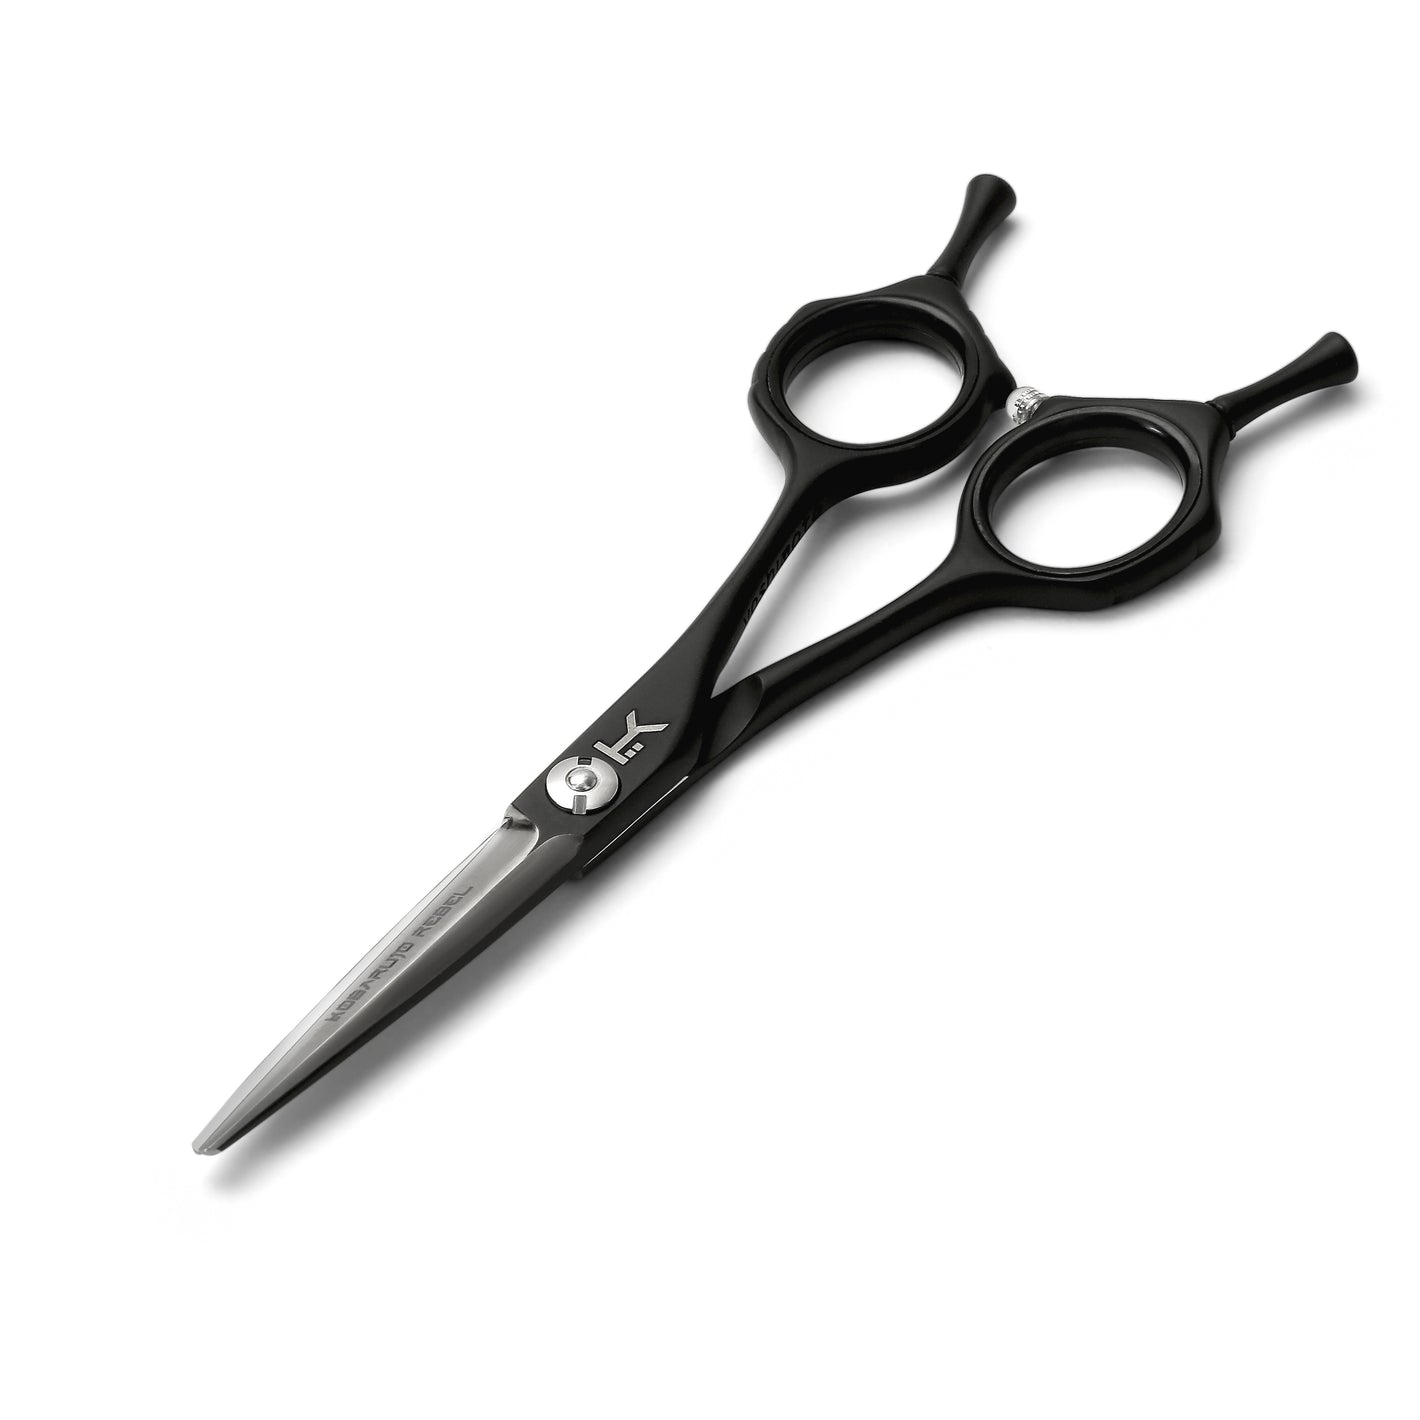 5 Inch Hair Scissors - beautyhair.co.uk